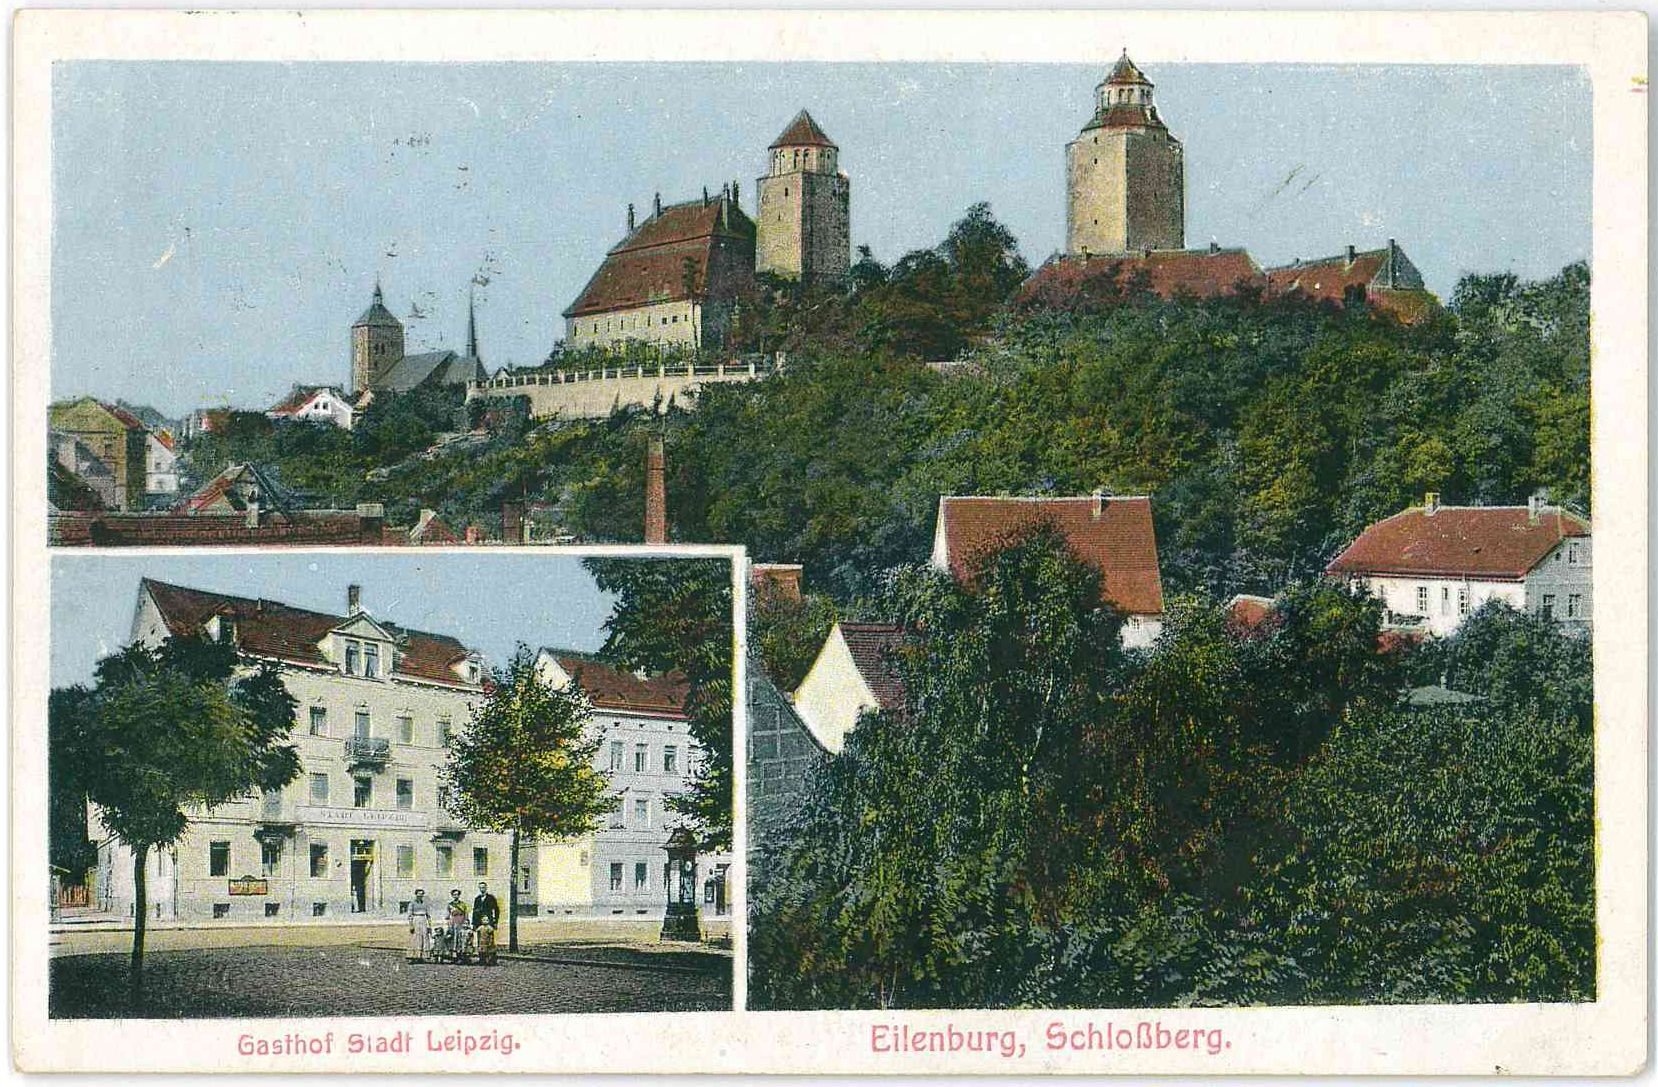 Eilenburg, Schloßberg (Stadtmuseum Eilenburg RR-P)